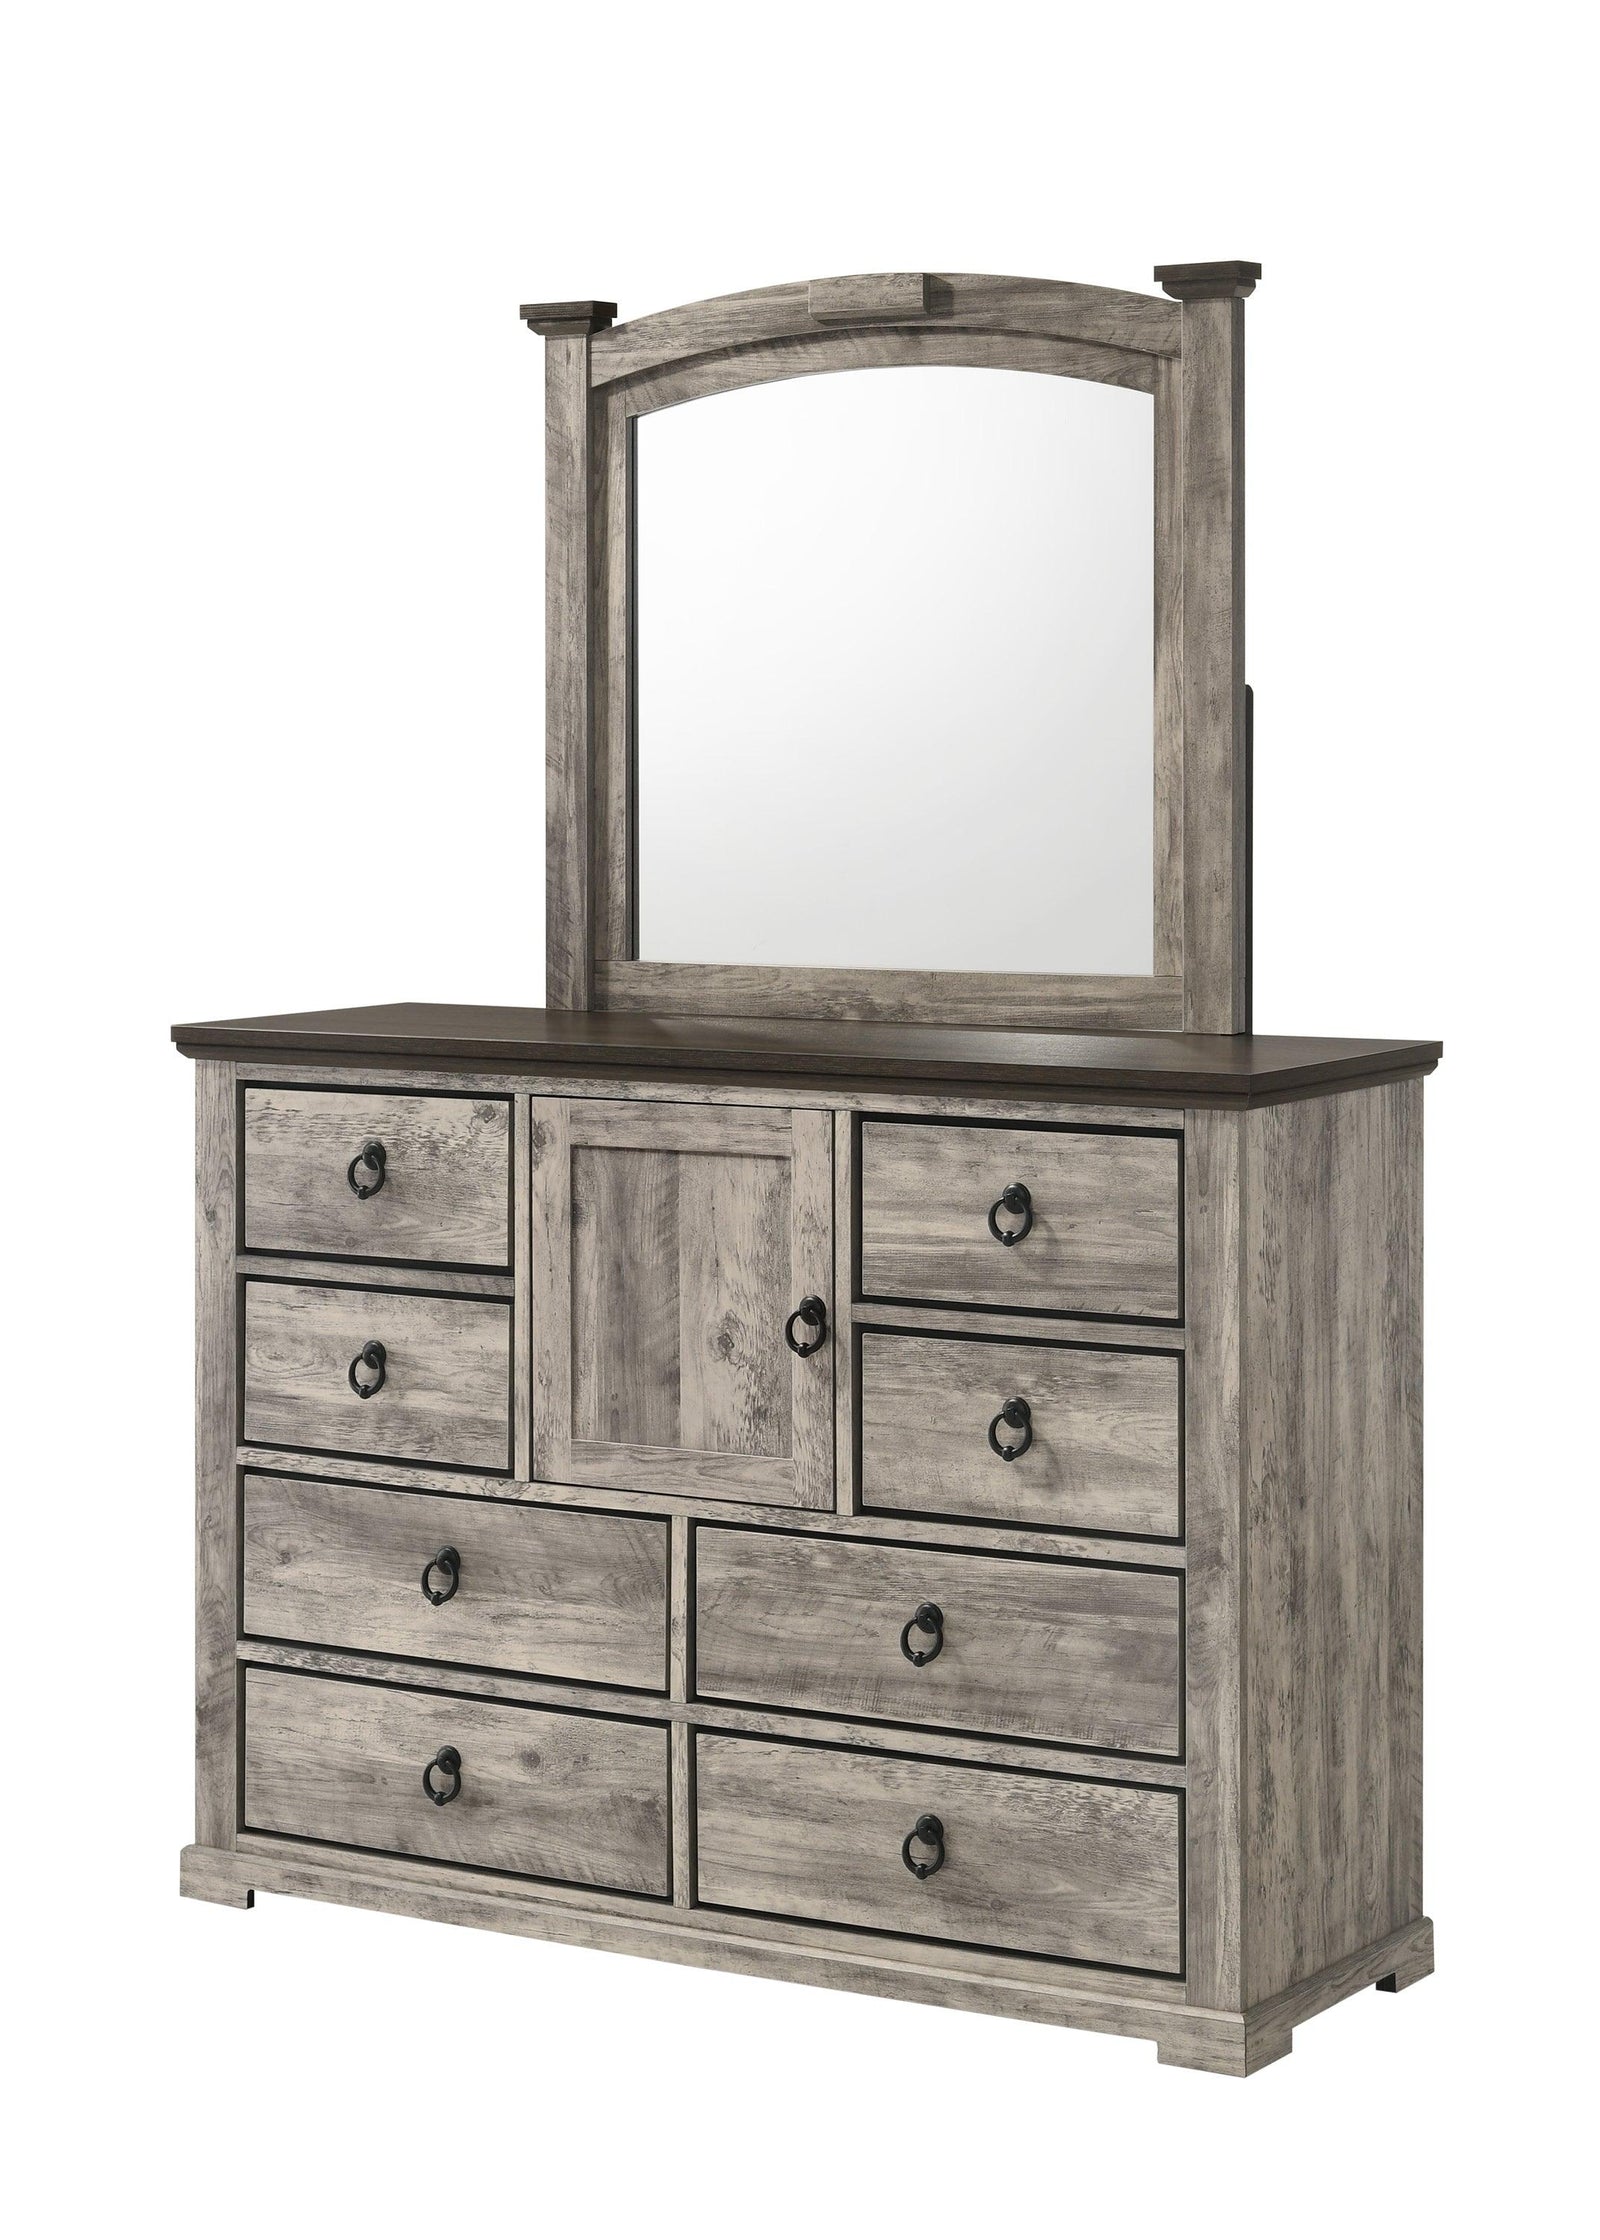 Ella-mae Gray Modern Contemporary Solid Wood And Veneers 9-Drawers Dresser - Ella Furniture